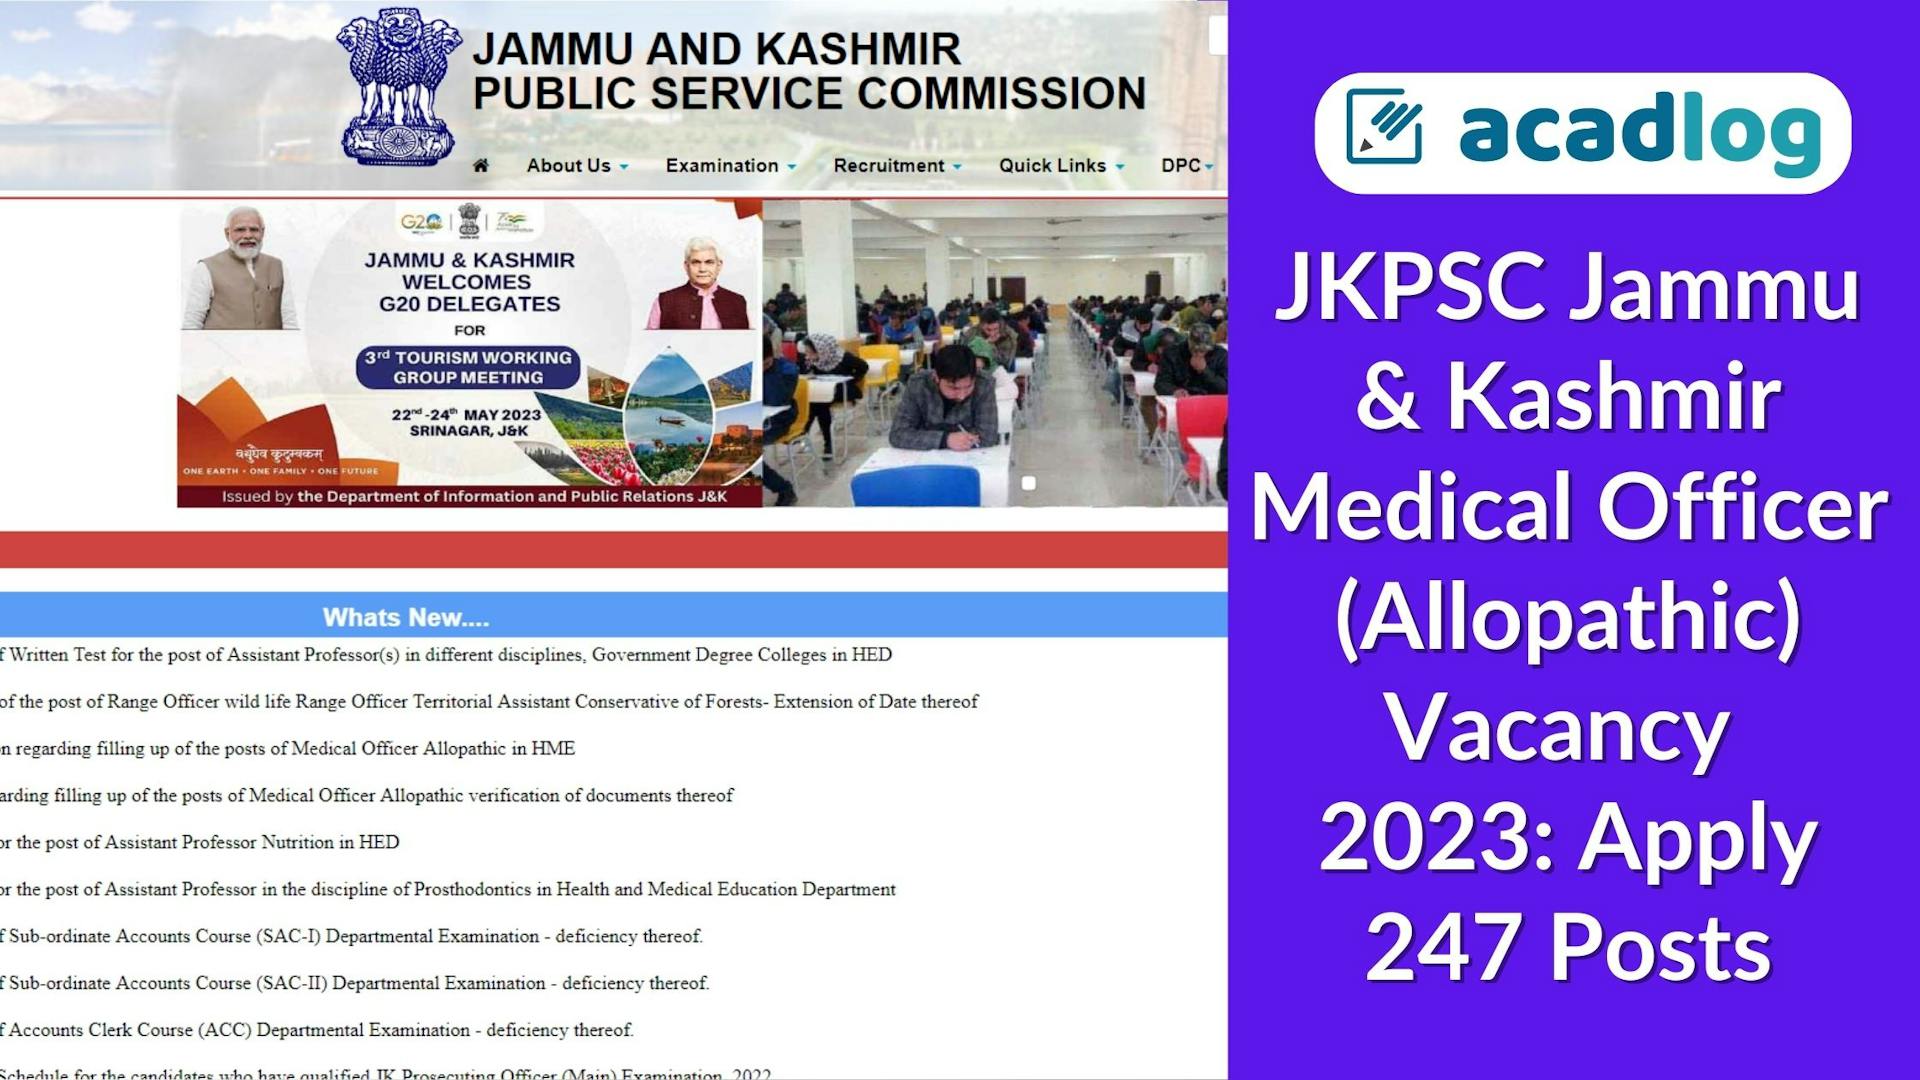 JKPSC Jammu & Kashmir Medical Officer (Allopathic) Vacancy 2023: Apply 247 Posts